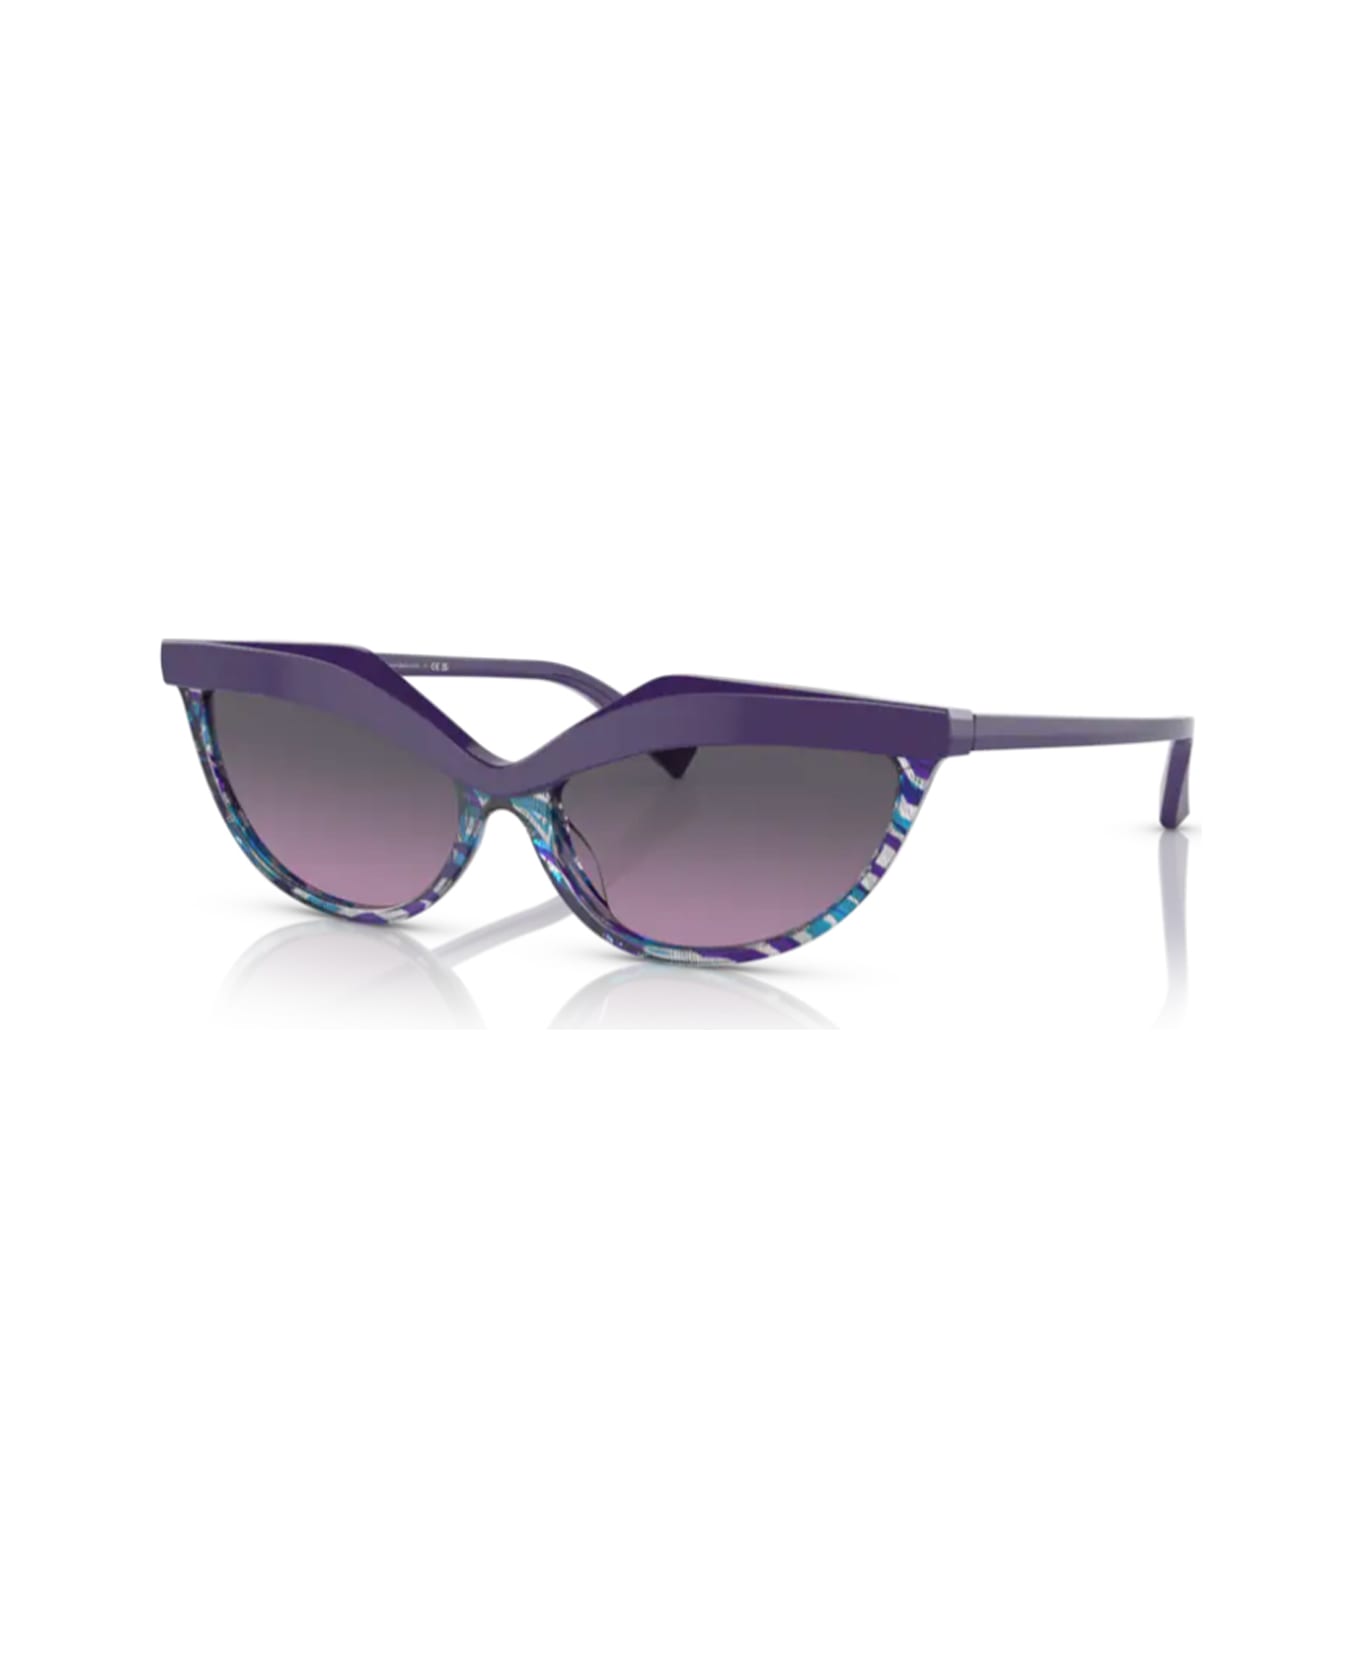 Alain Mikli A05070 Sunglasses - Viola